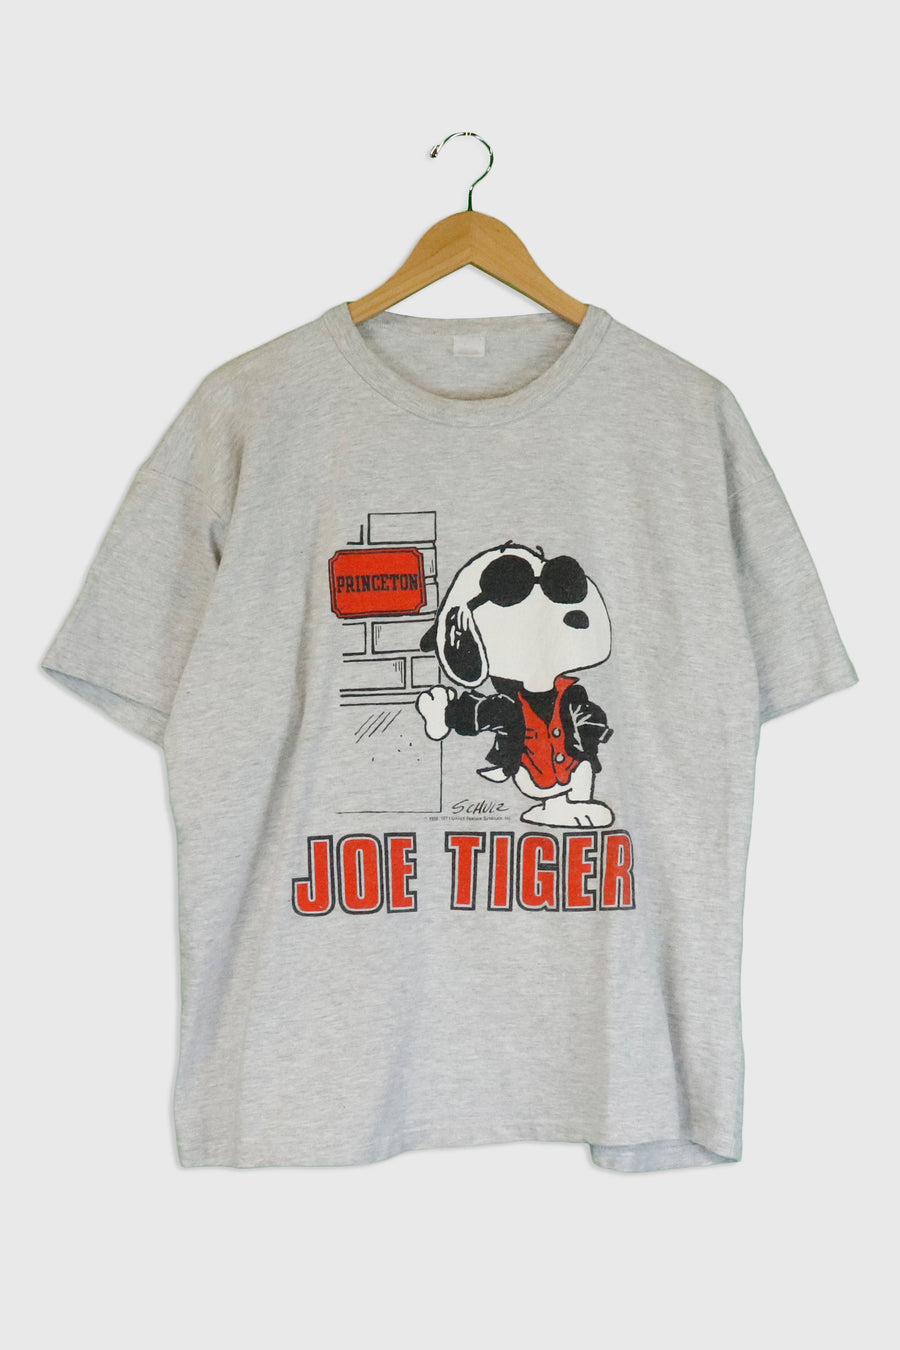 Vintage 1971 Joe Tiger Princeton Snoopy Graphic Varsity T Shirt Sz XL